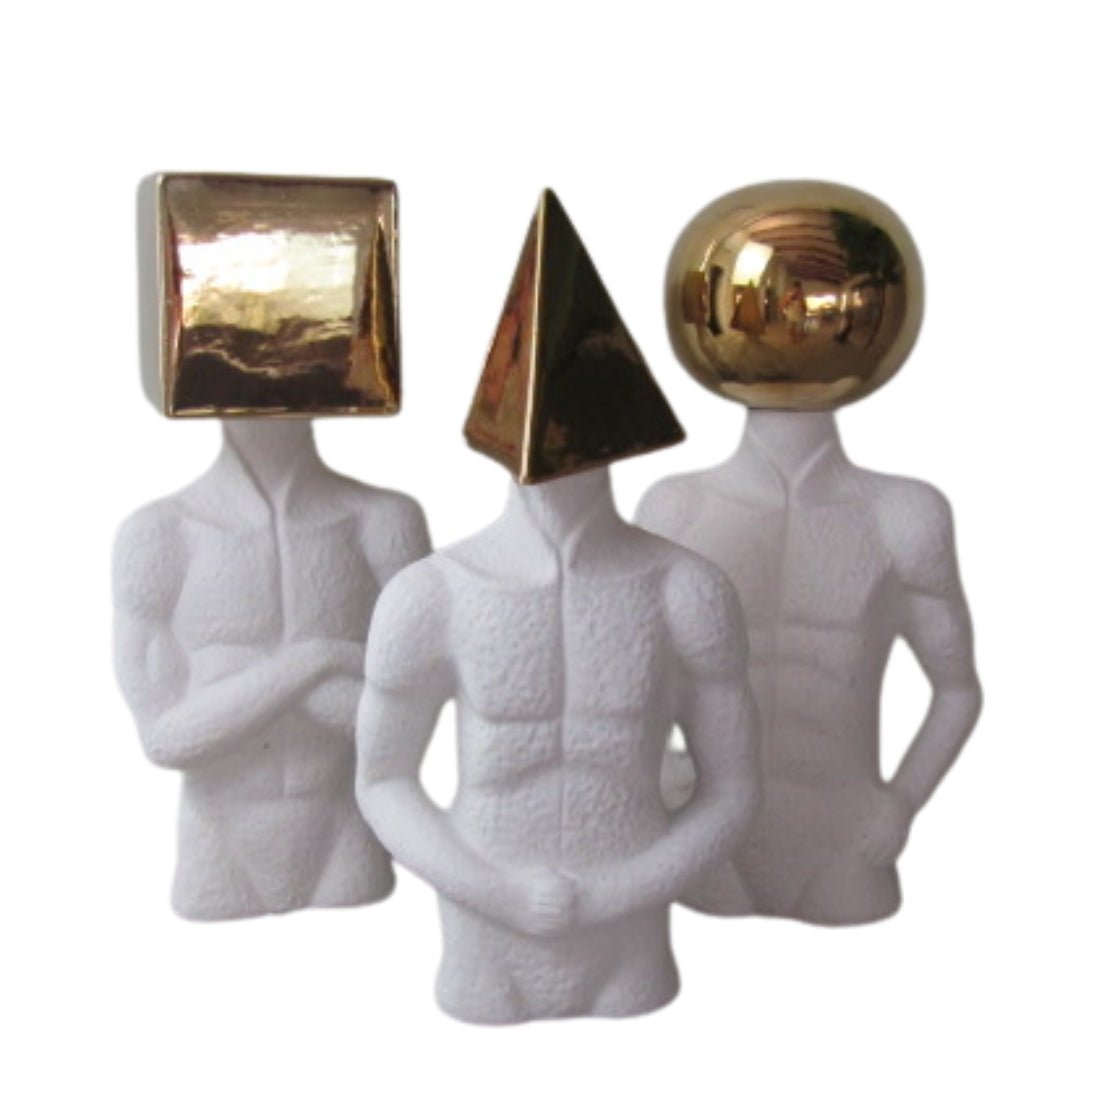 Modern Decor figurines